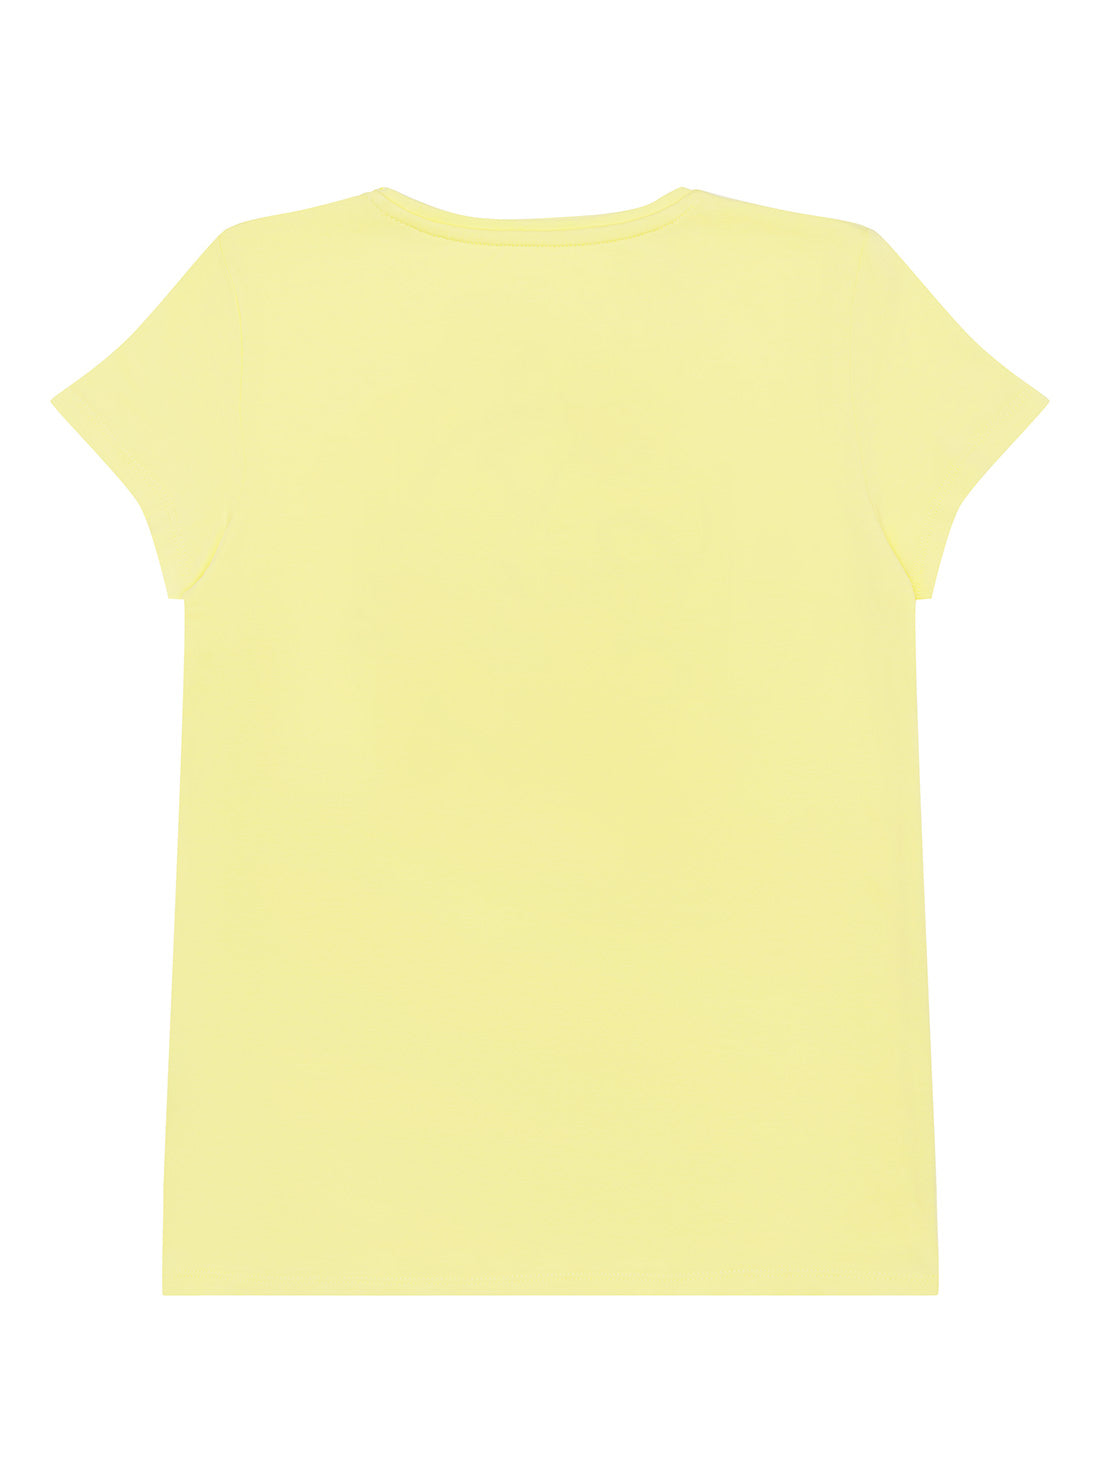 Yellow Guess 81 Heart Logo T-Shirt (7-16)